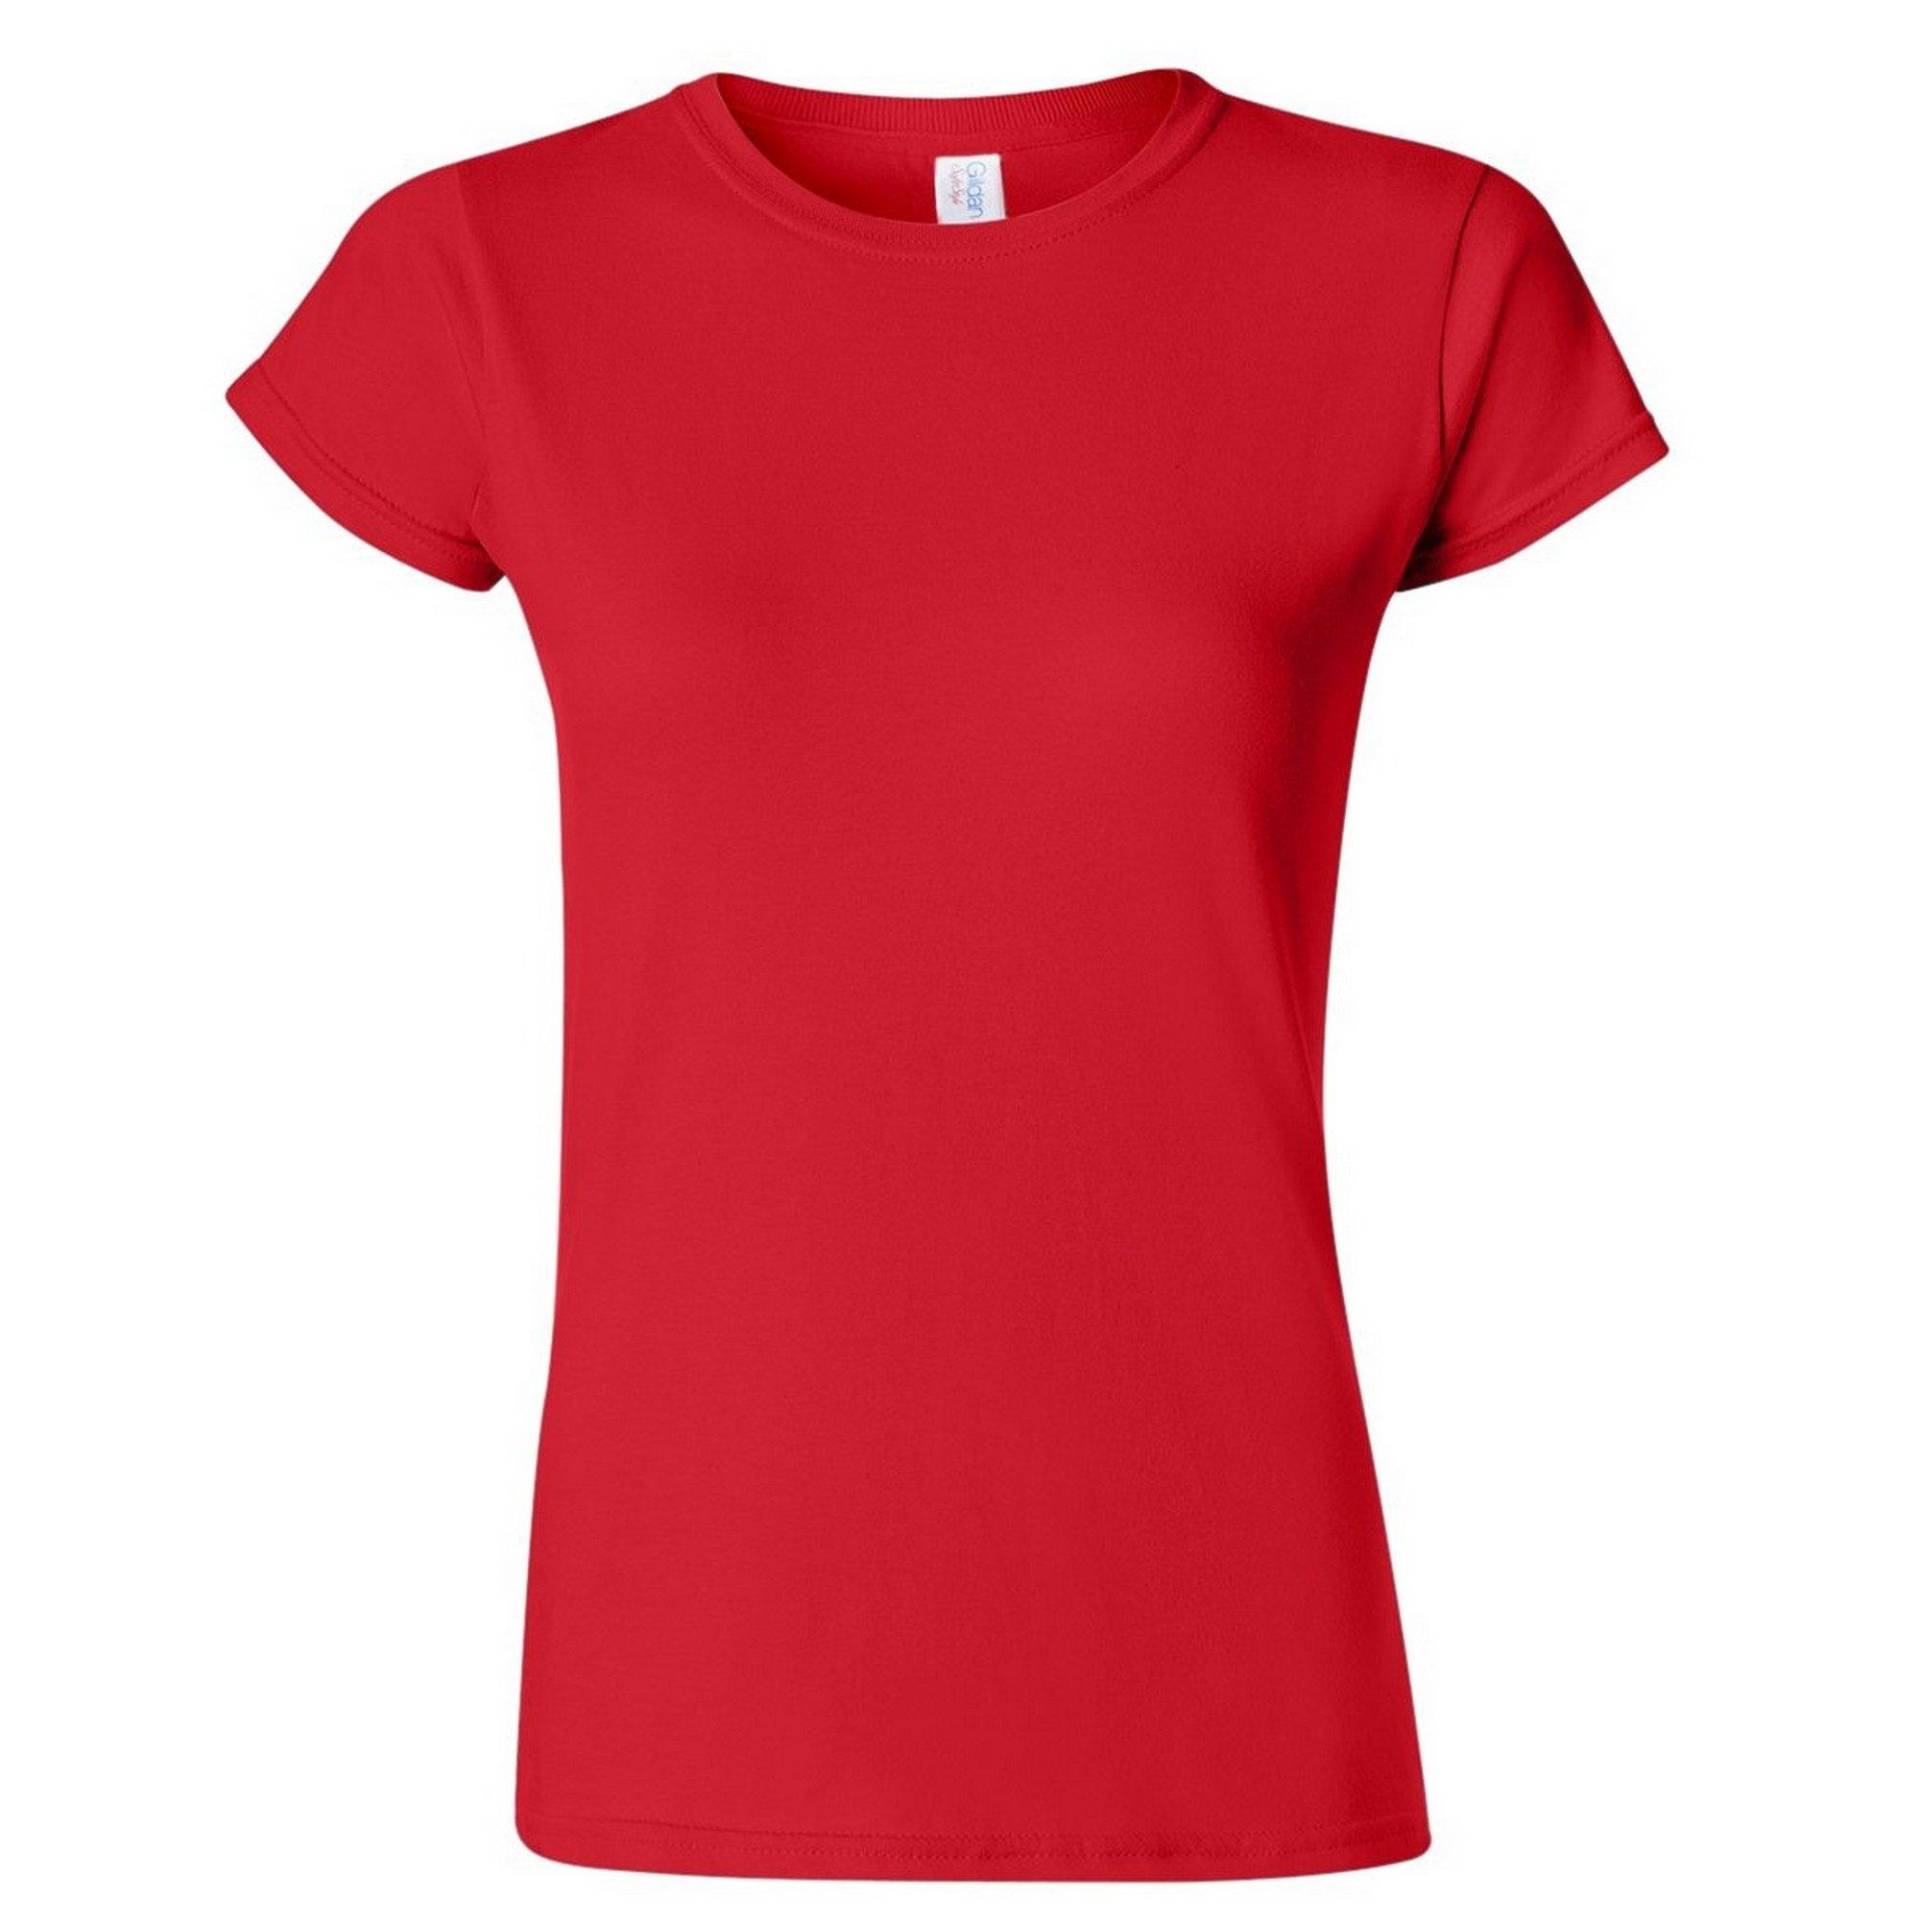 Soft Style Kurzarm Tshirt Damen Rot Bunt L von Gildan